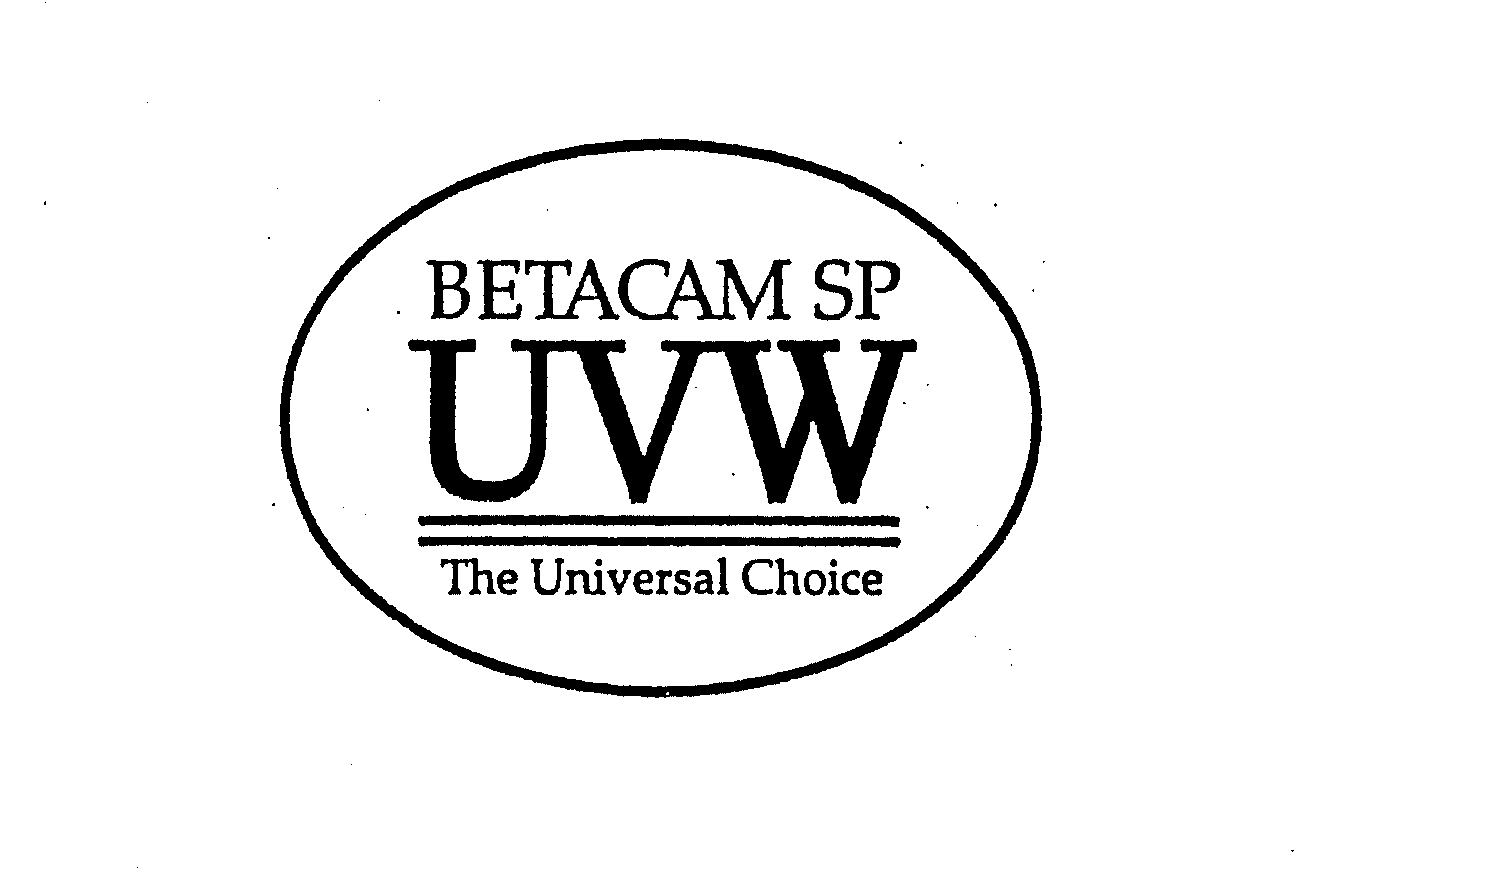  BETACAM SP UVW THE UNIVERSAL CHOICE